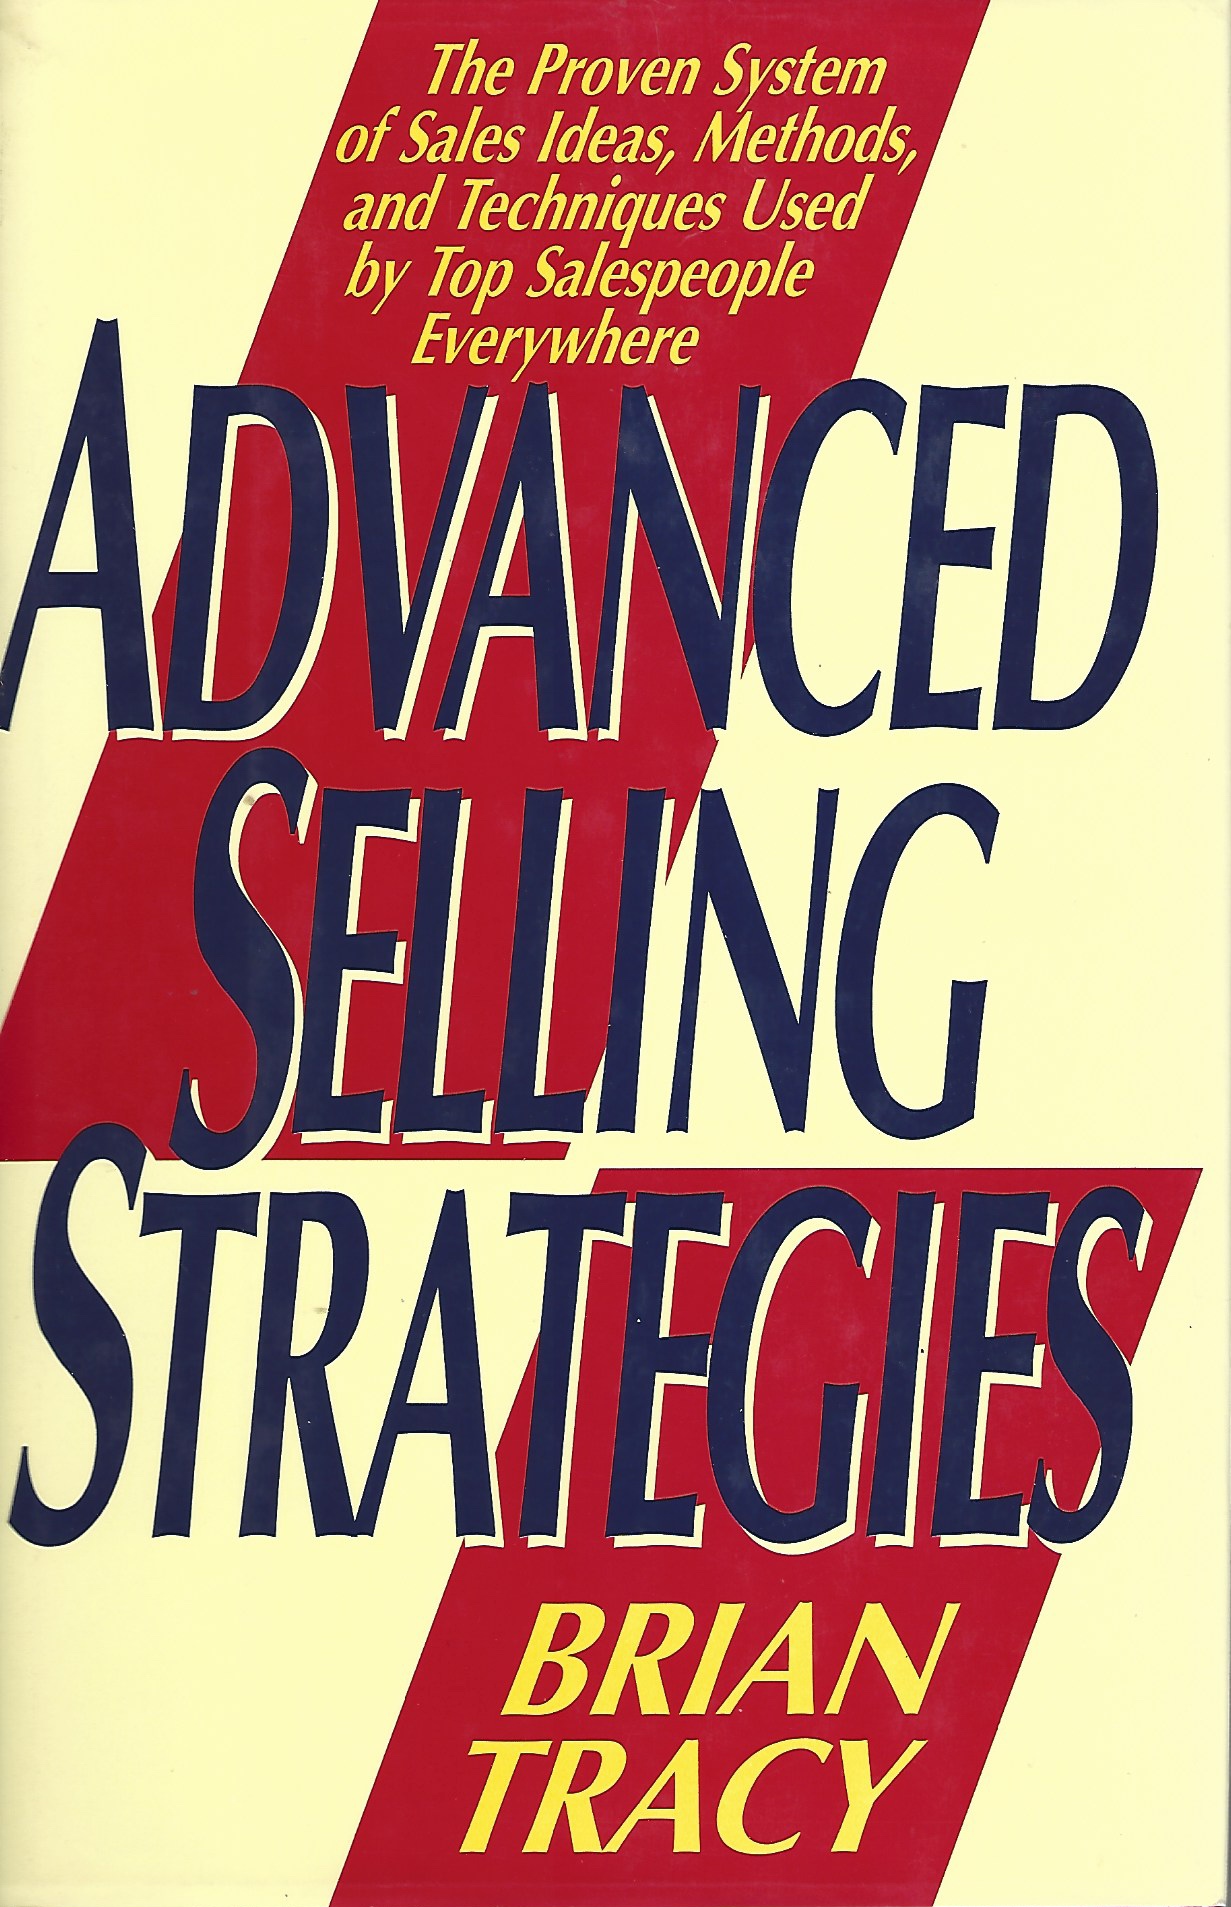 TRACY BRIAN - Advanced Selling Strategies